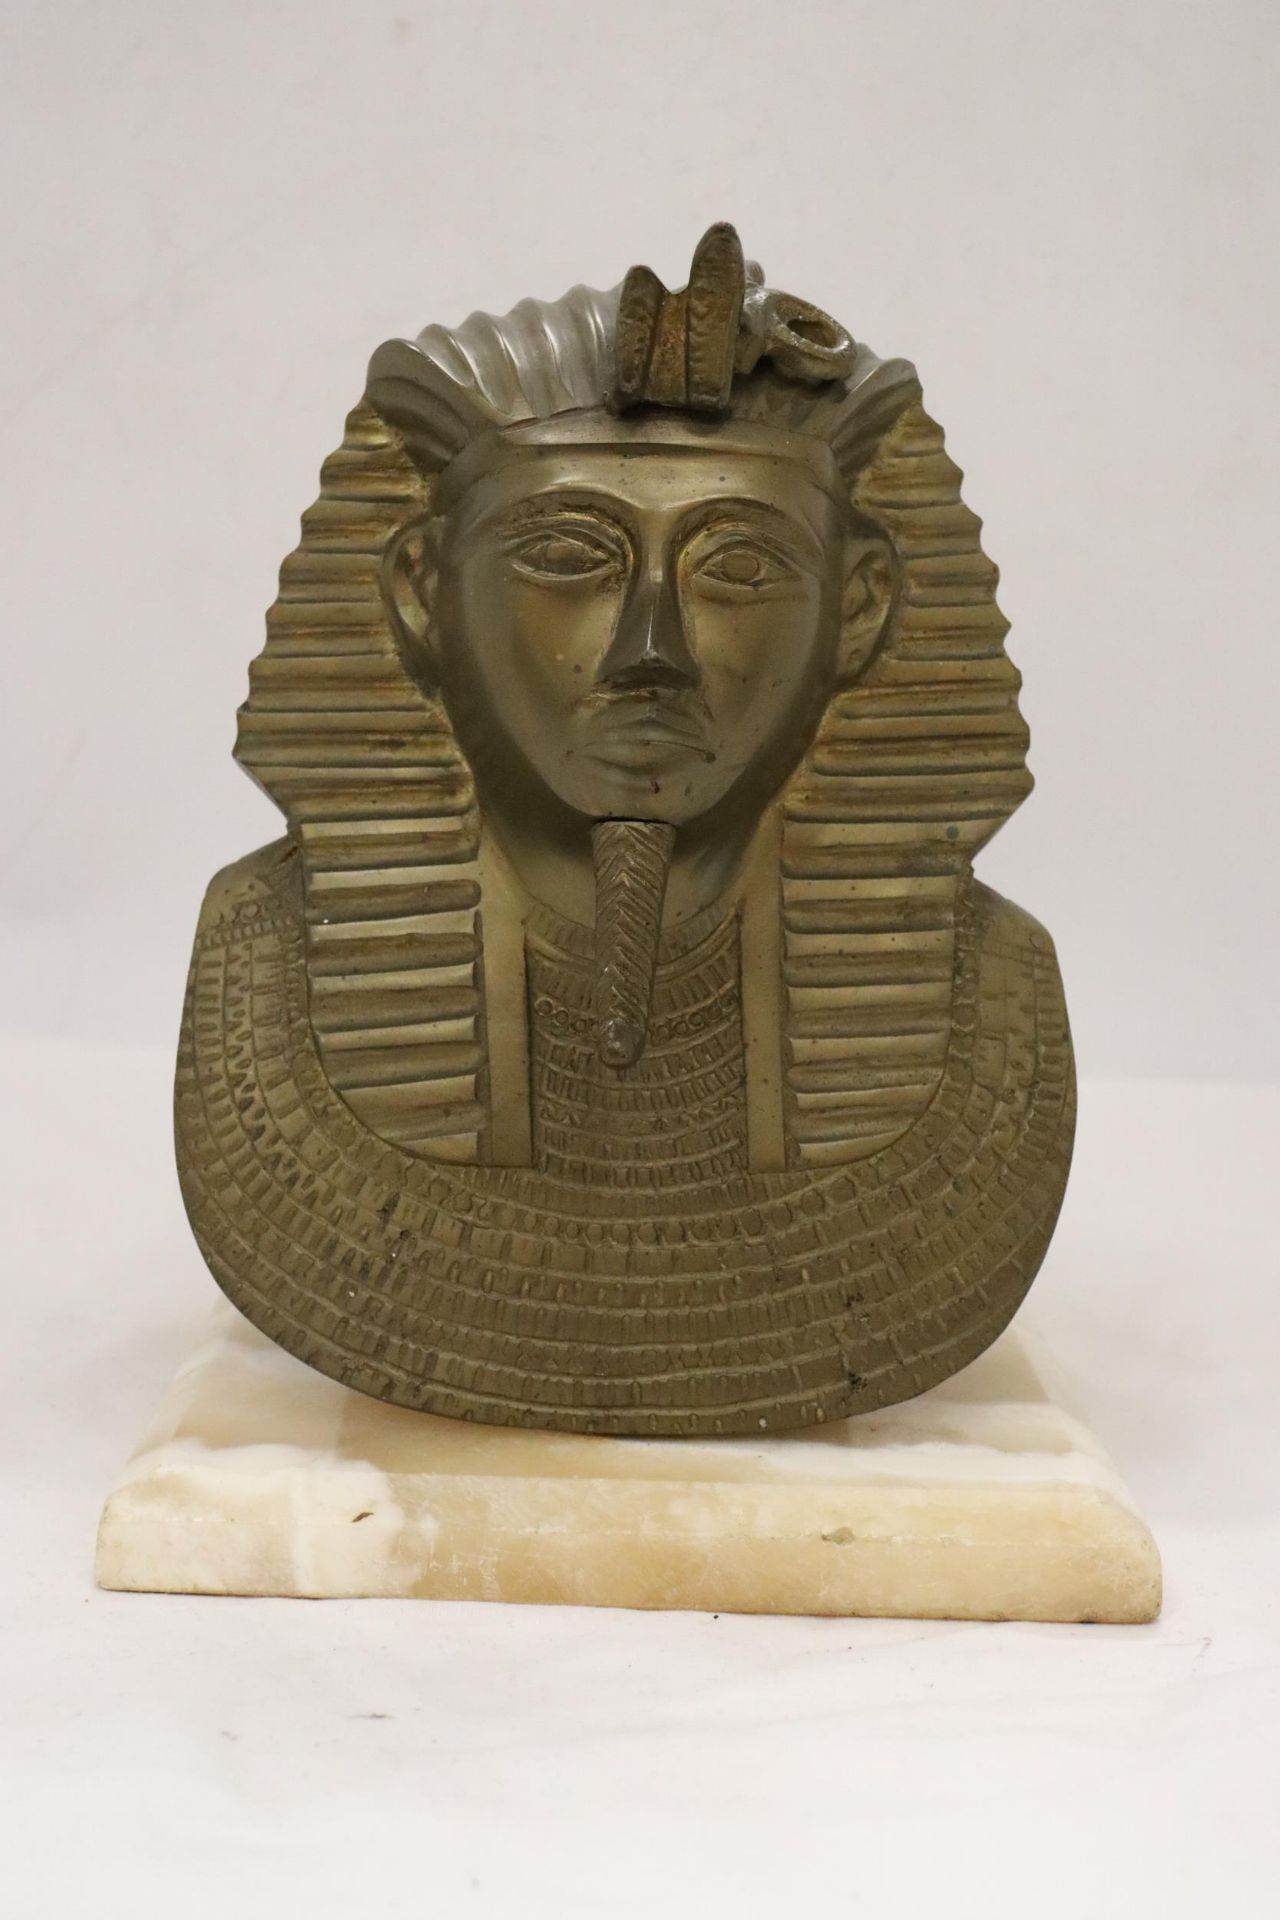 A LARGE HEAVY EGYPTIAN HEAD ON MARBLE BASE